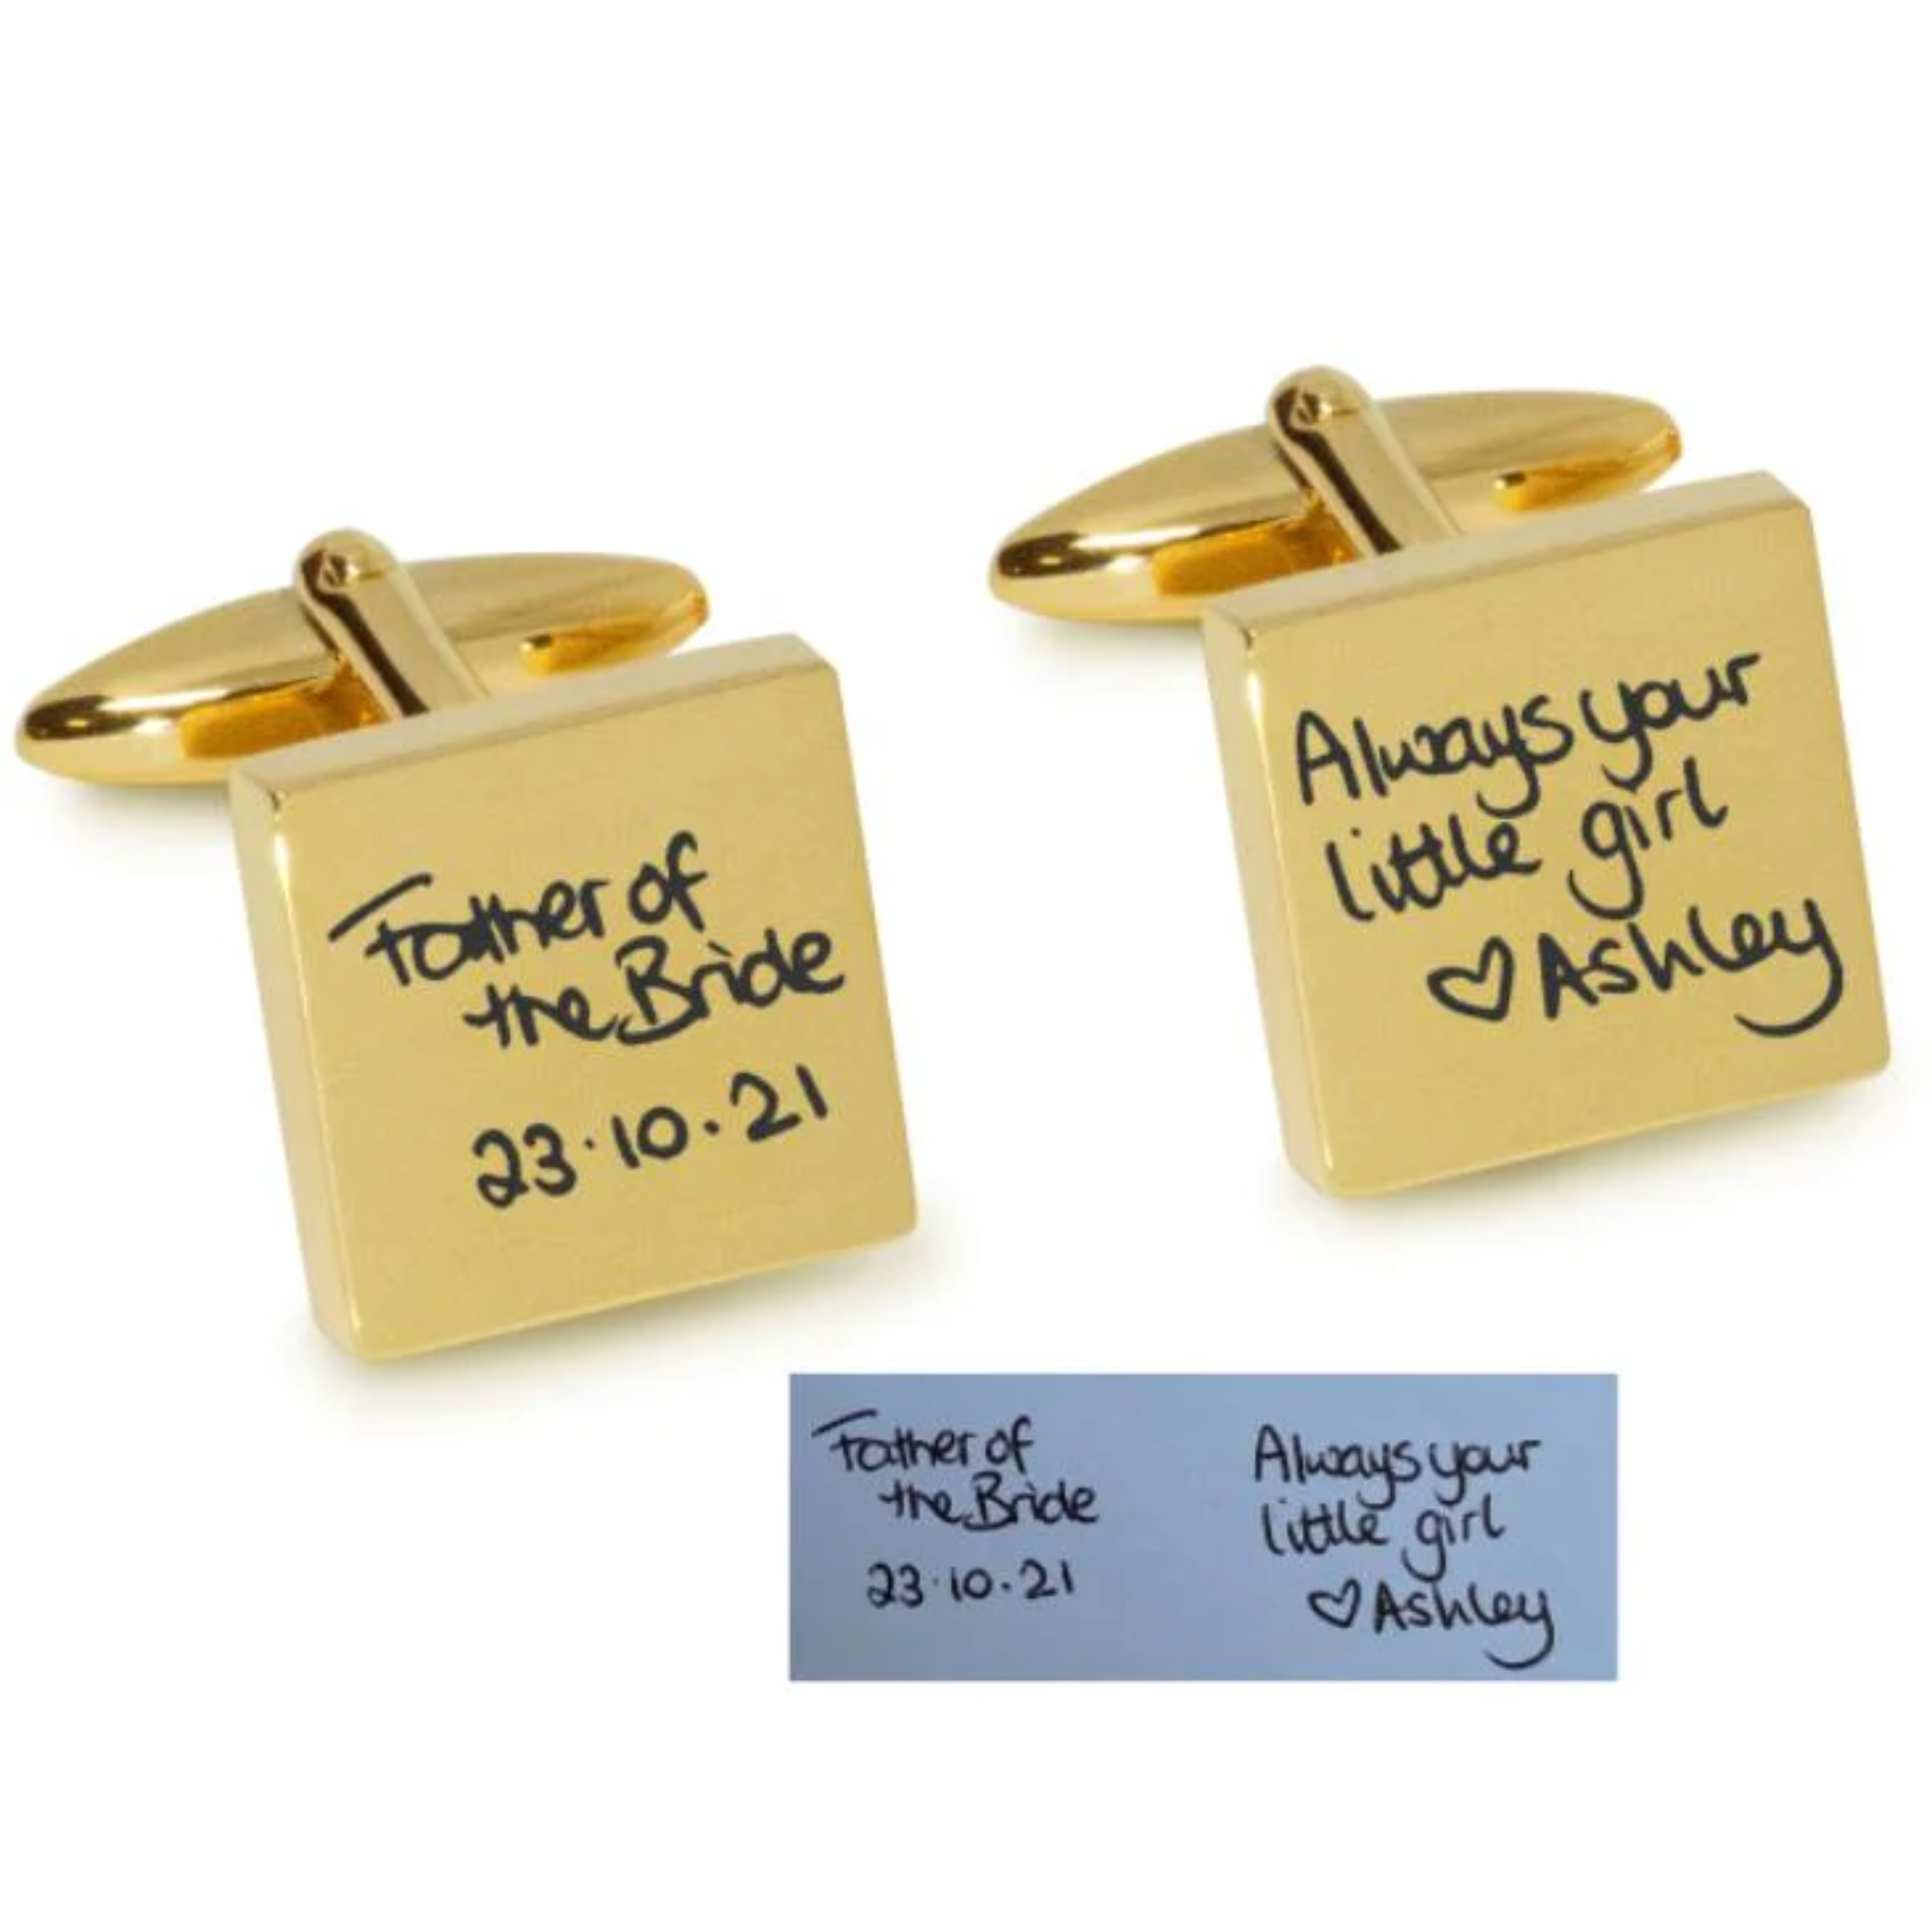 Own Handwriting Custom Engraved Cufflinks in Gold